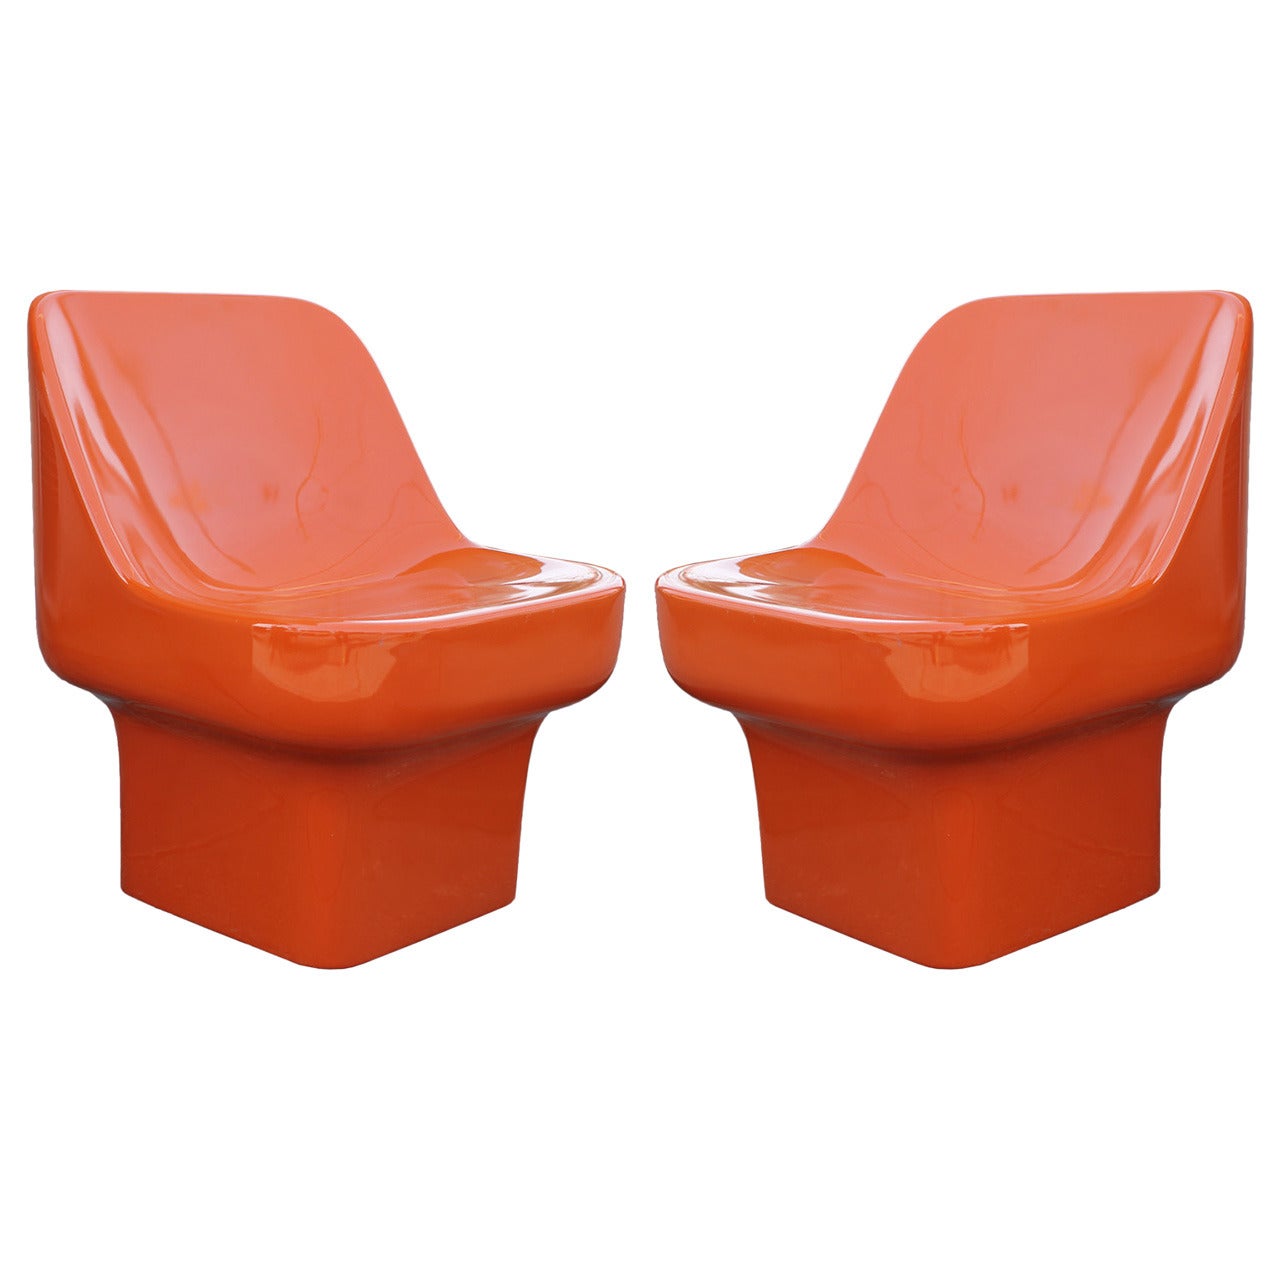 Douglas Deeds Glossy Orange Lacquered Fiberglass Chairs